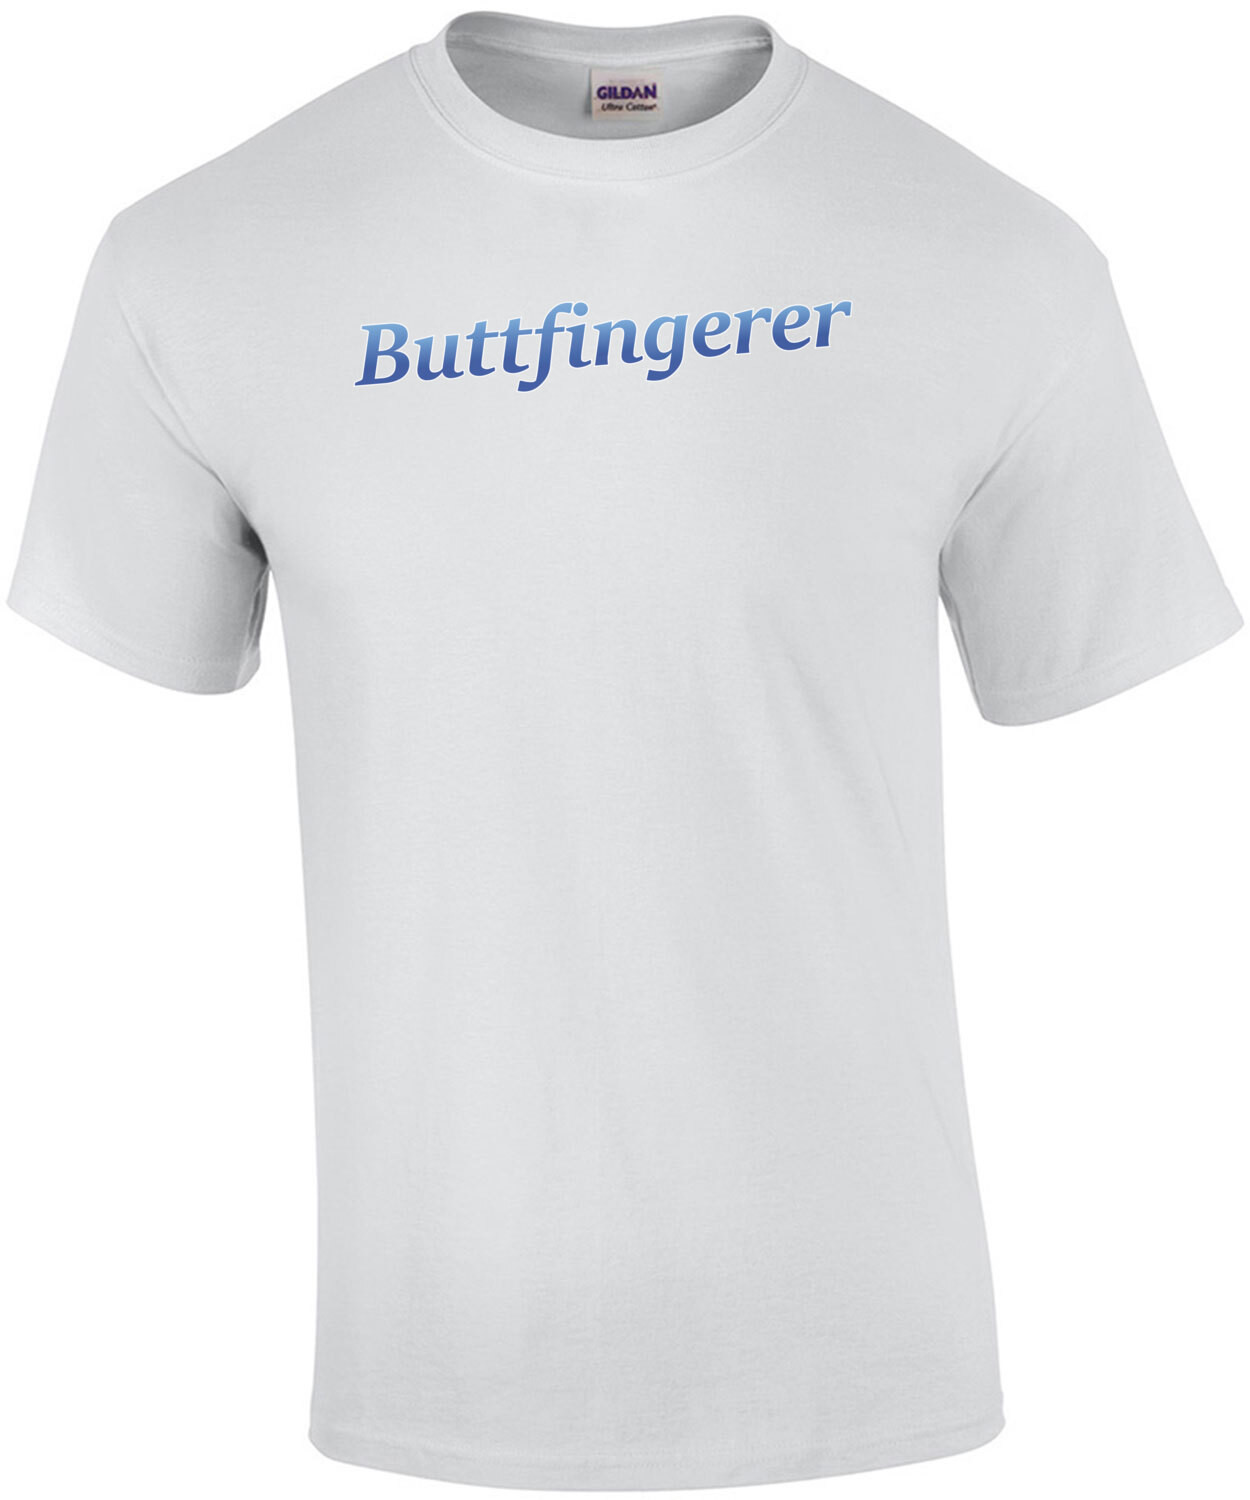 Buttfingerer - Butterfinger Parody Funny Sexual Offensive T-Shirt